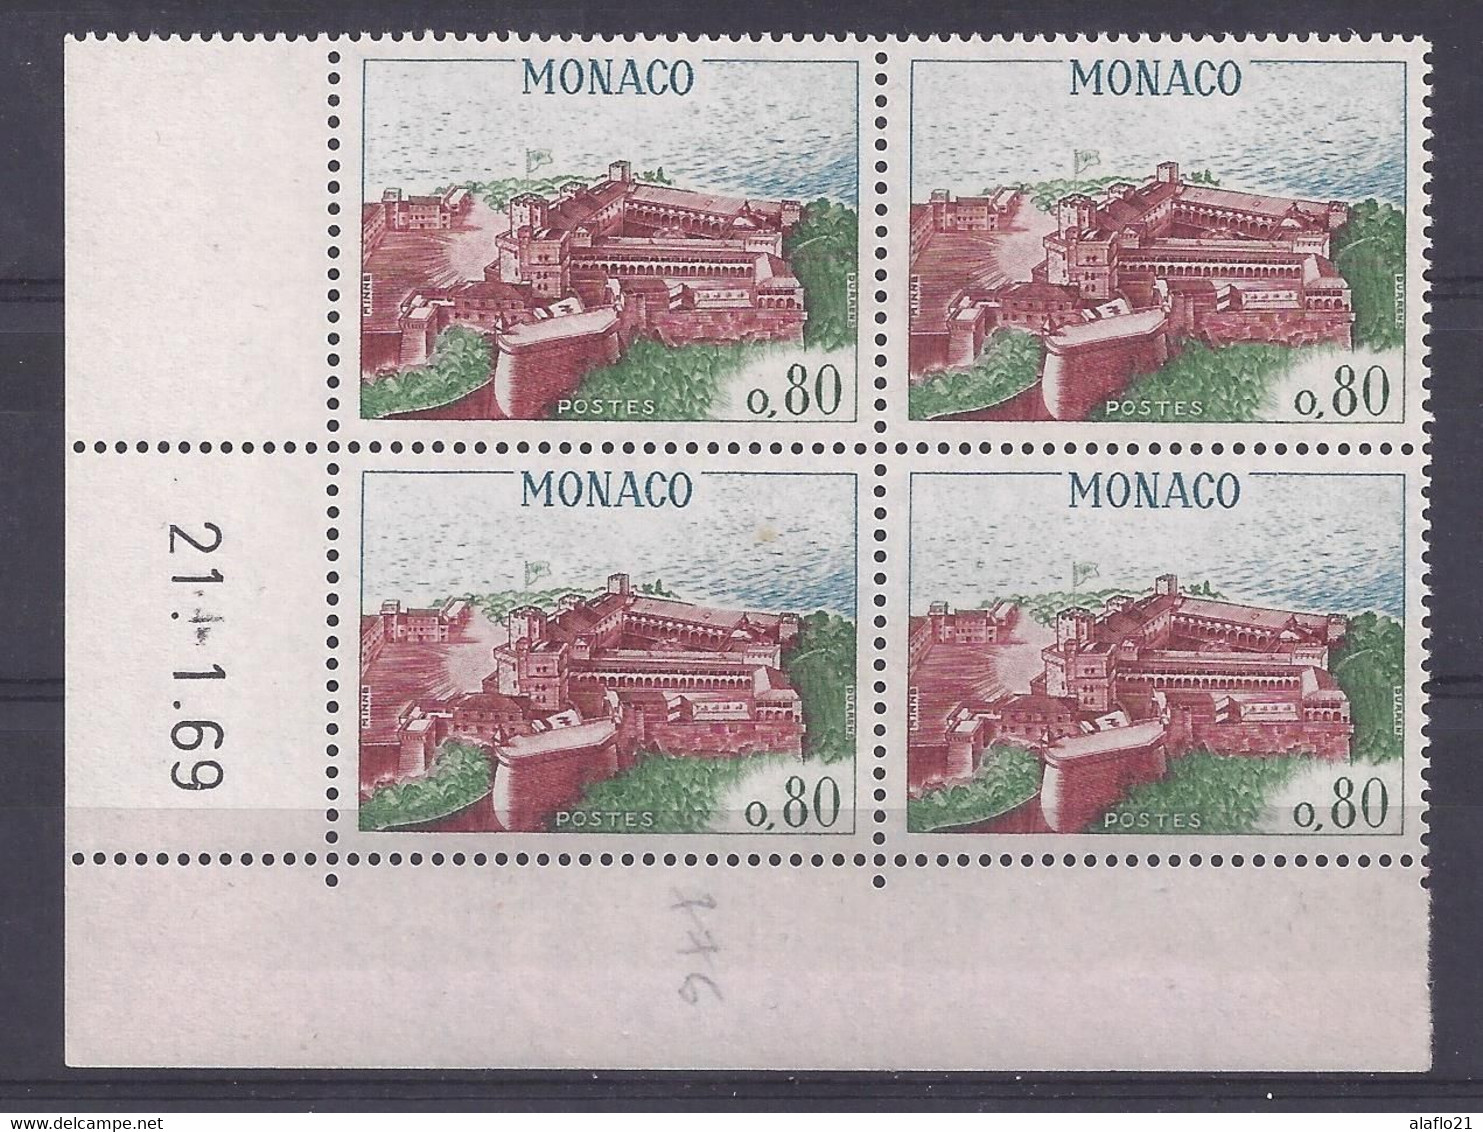 MONACO N° 776 - Bloc De 4 COIN DATE - NEUF SANS CHARNIERE - 21/1/69 - Unused Stamps